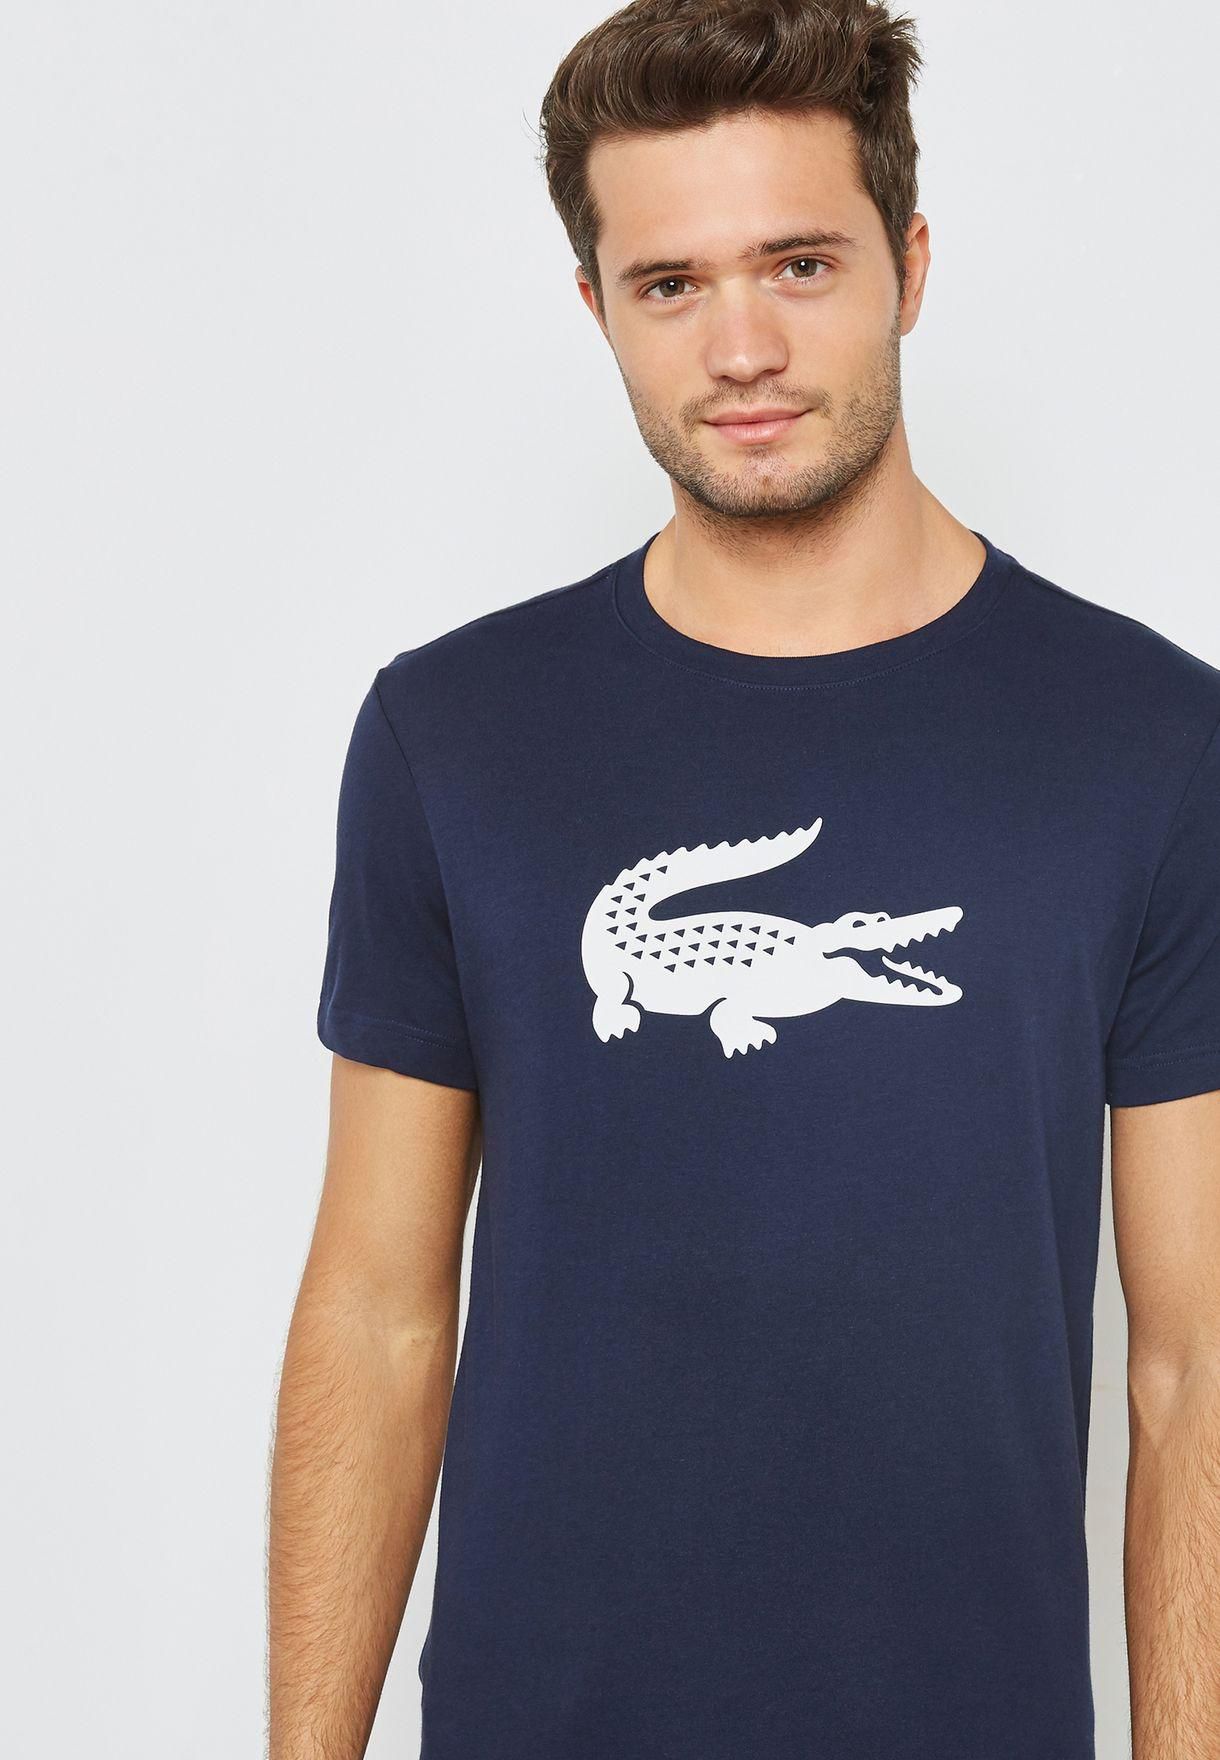 Croc Logo T-Shirt price from namshi in Saudi Arabia - Yaoota!